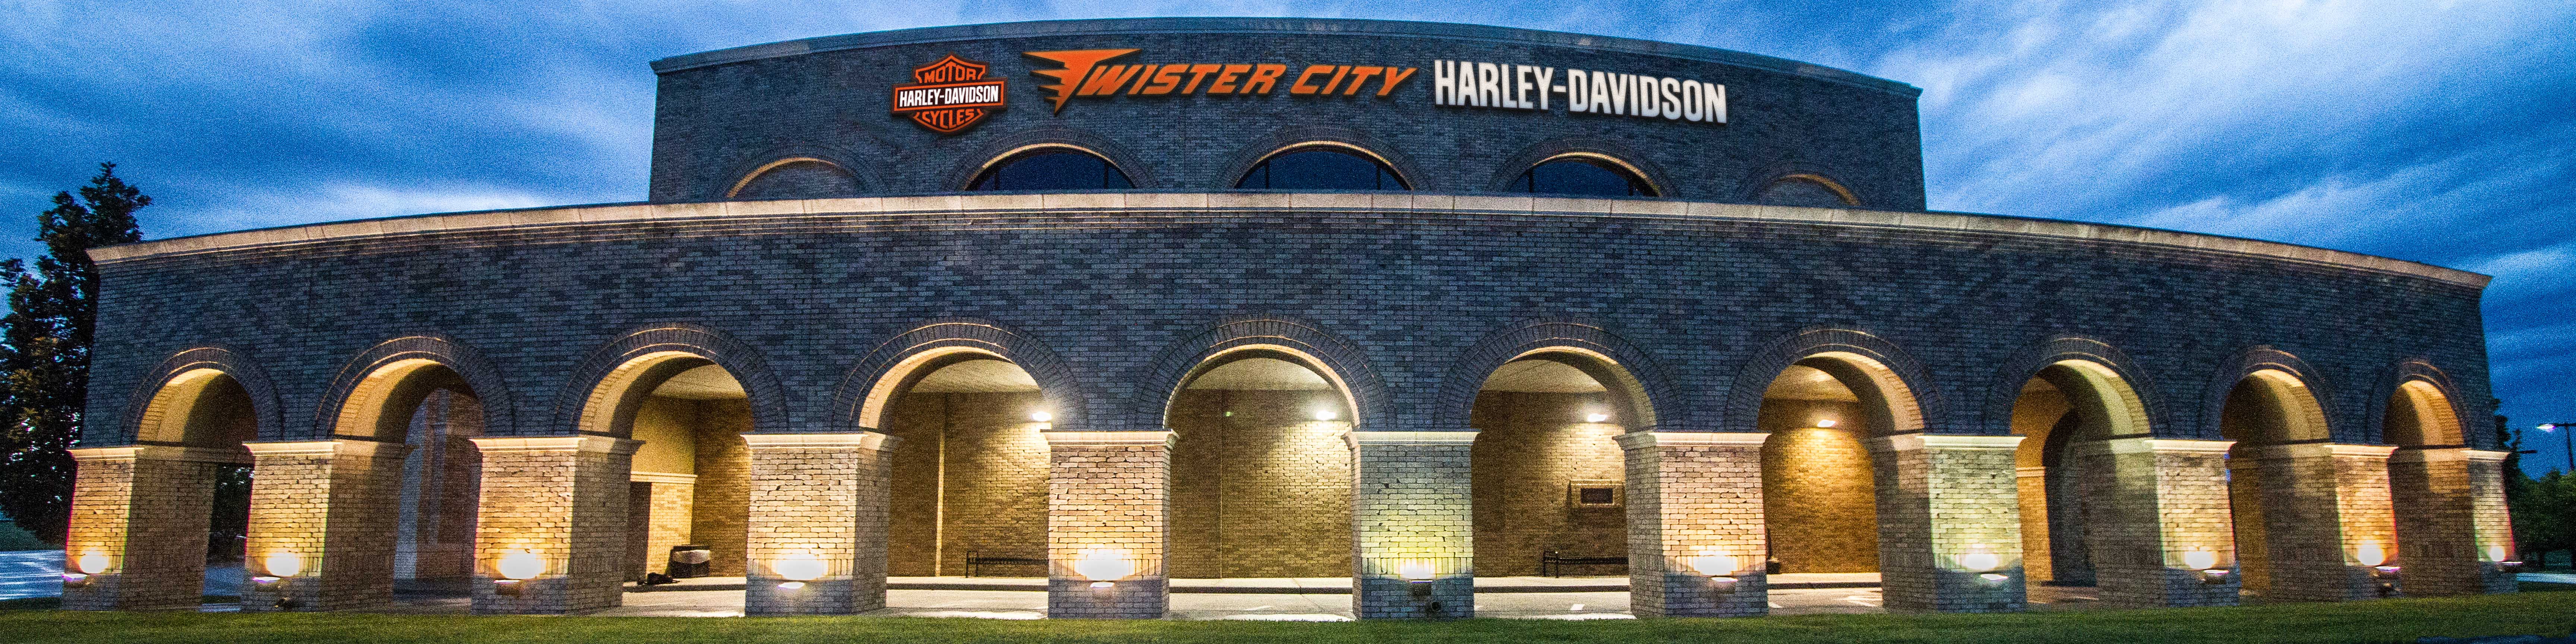 Pre-owned inventory, Twister City Harley-Davidson, Wichita, KS